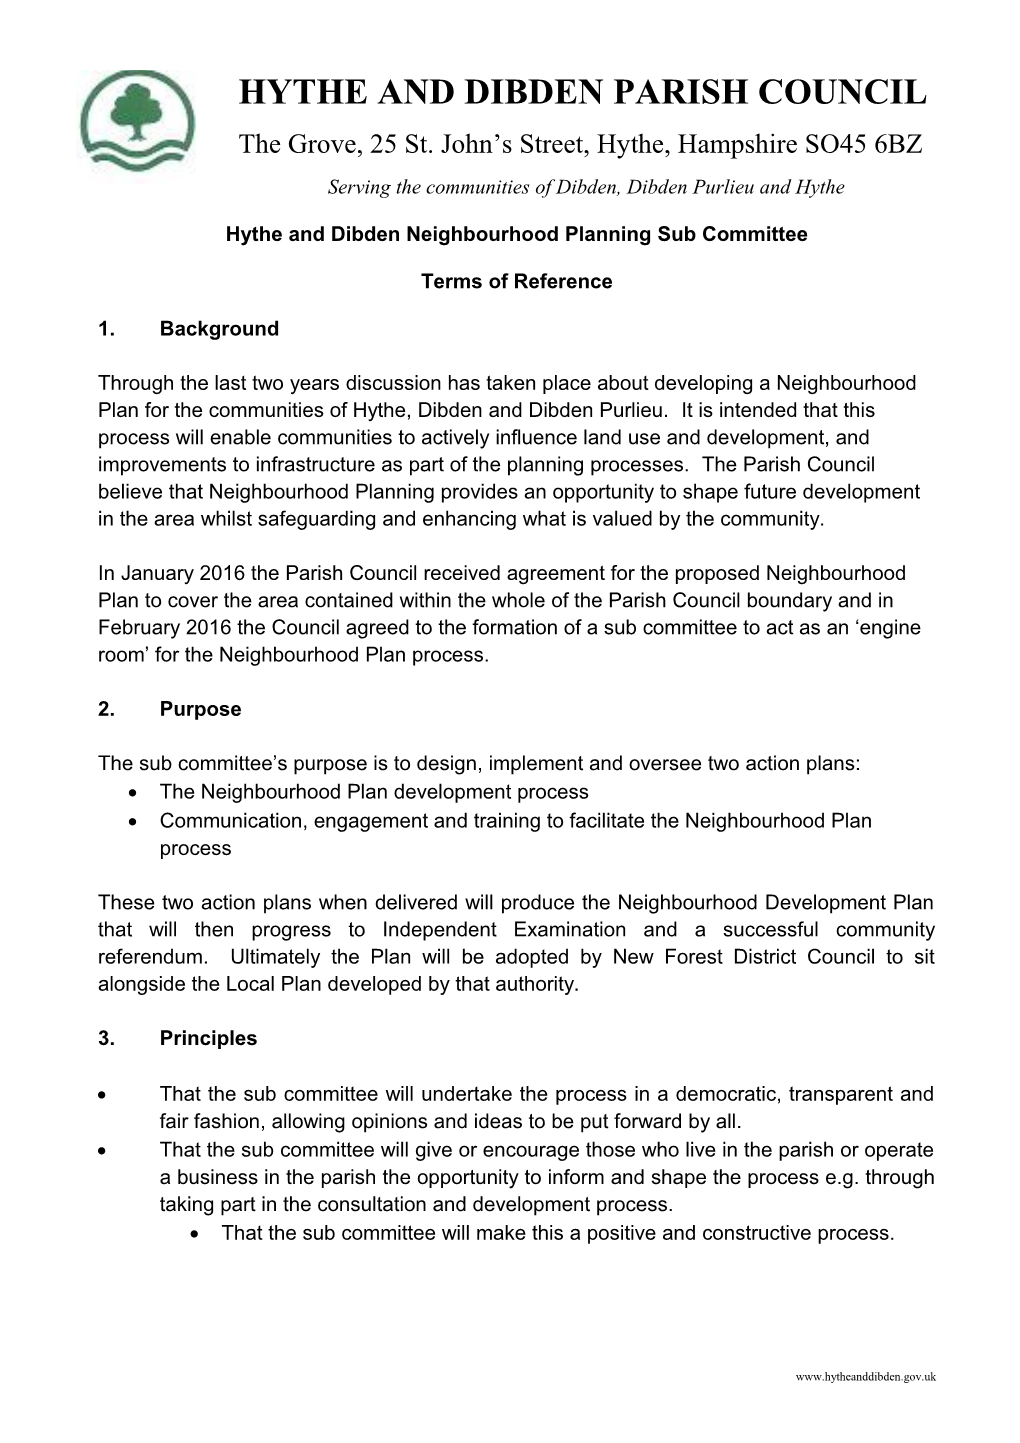 Hythe and Dibden Neighbourhood Planning Sub Committee